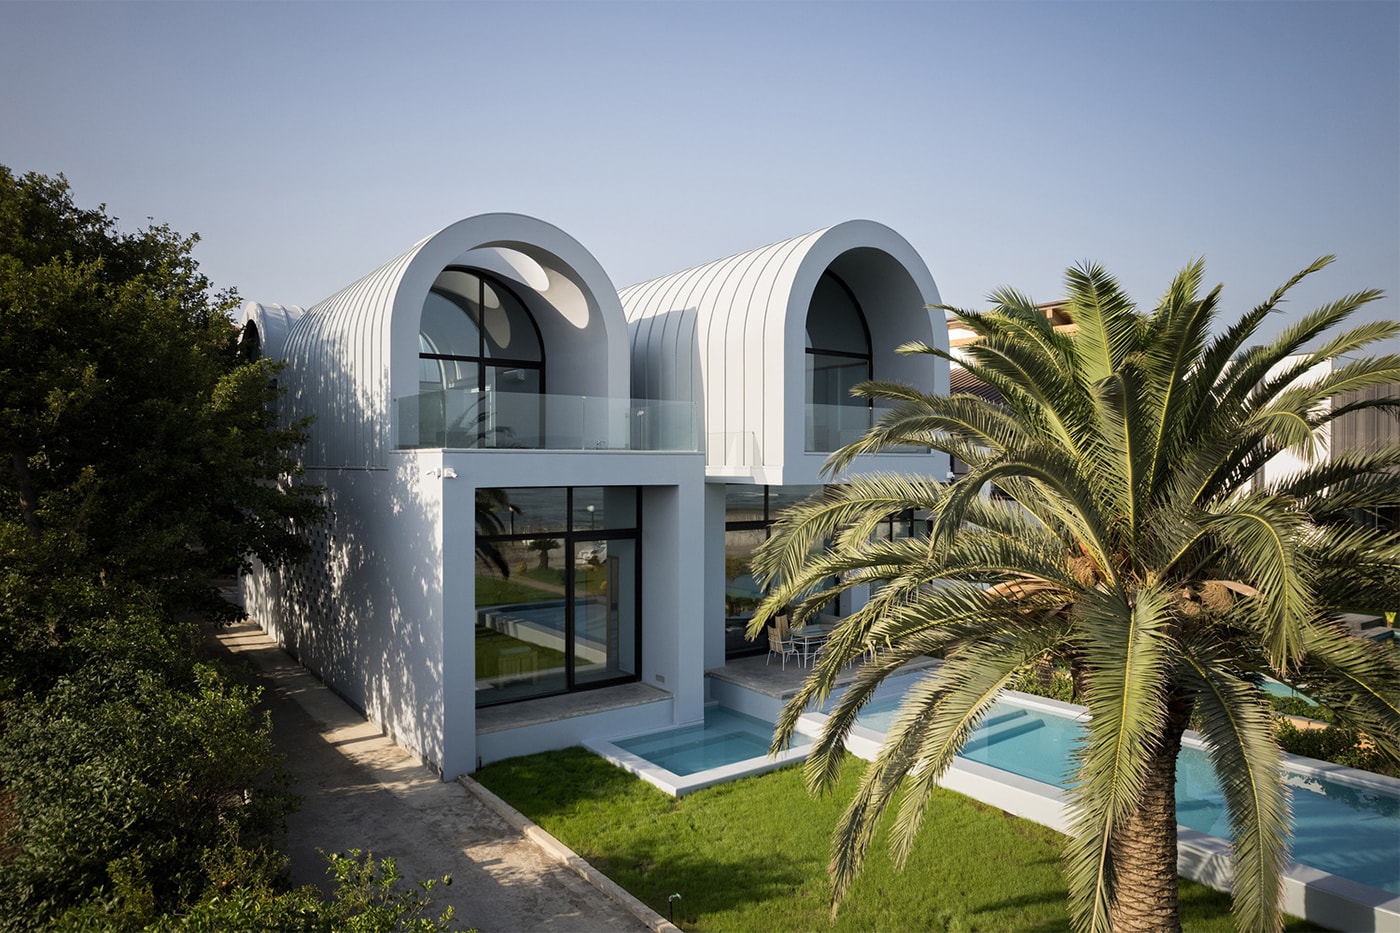 "Vaulted Villa" by KRDS Architects Overlooks the Caspian Sea